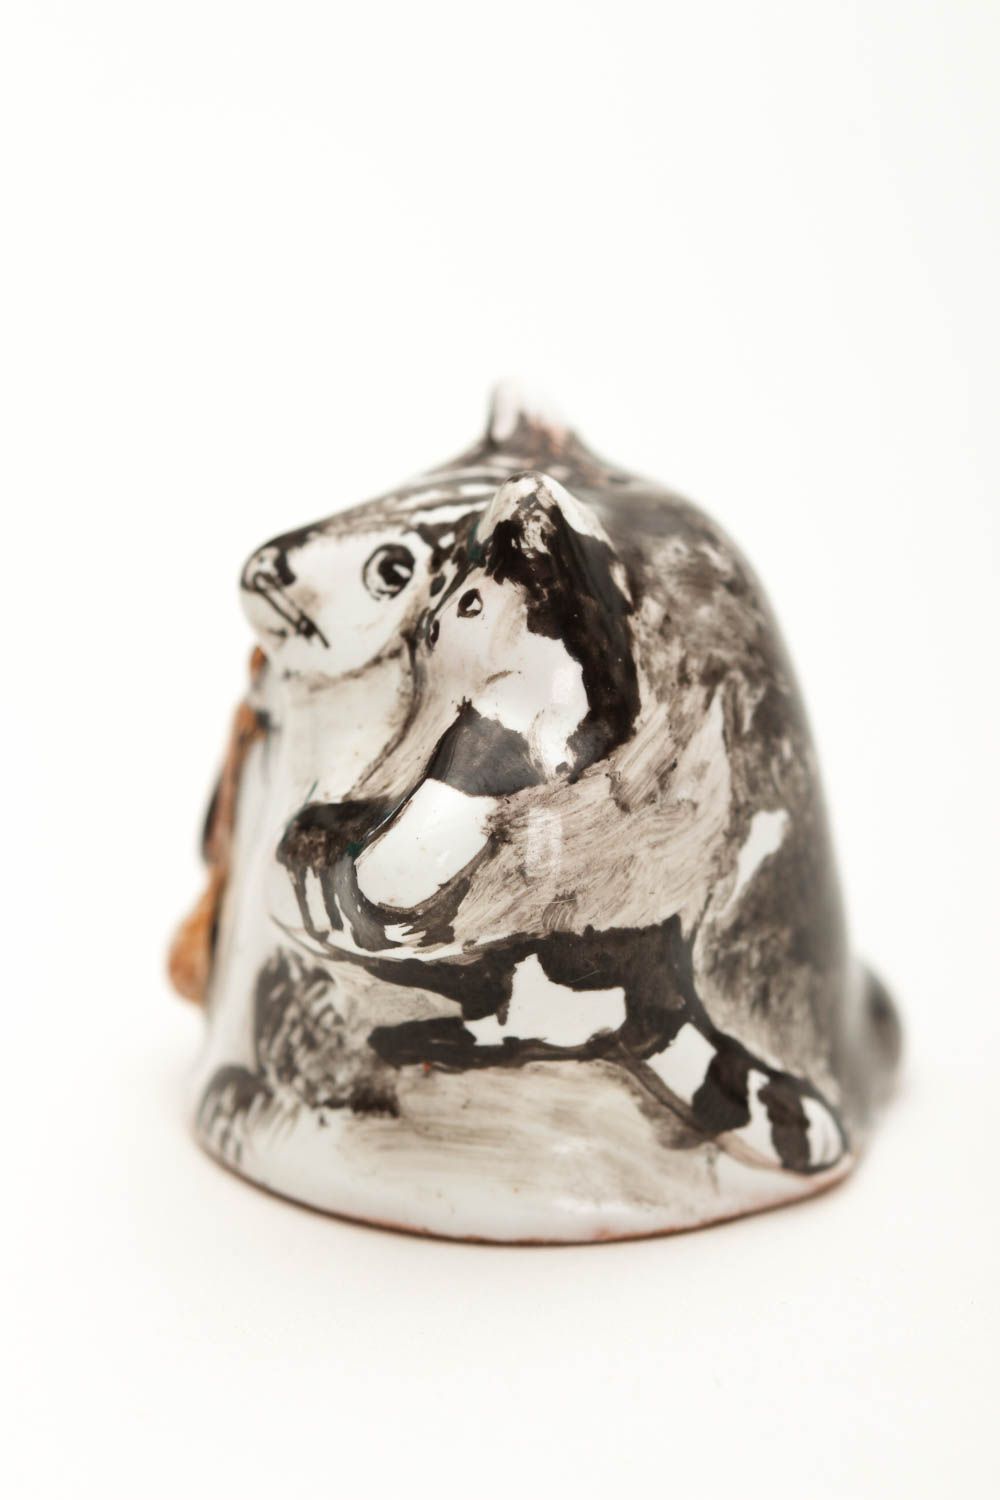 Handmade collectible thimble ceramic decorative use only animal figurine photo 4